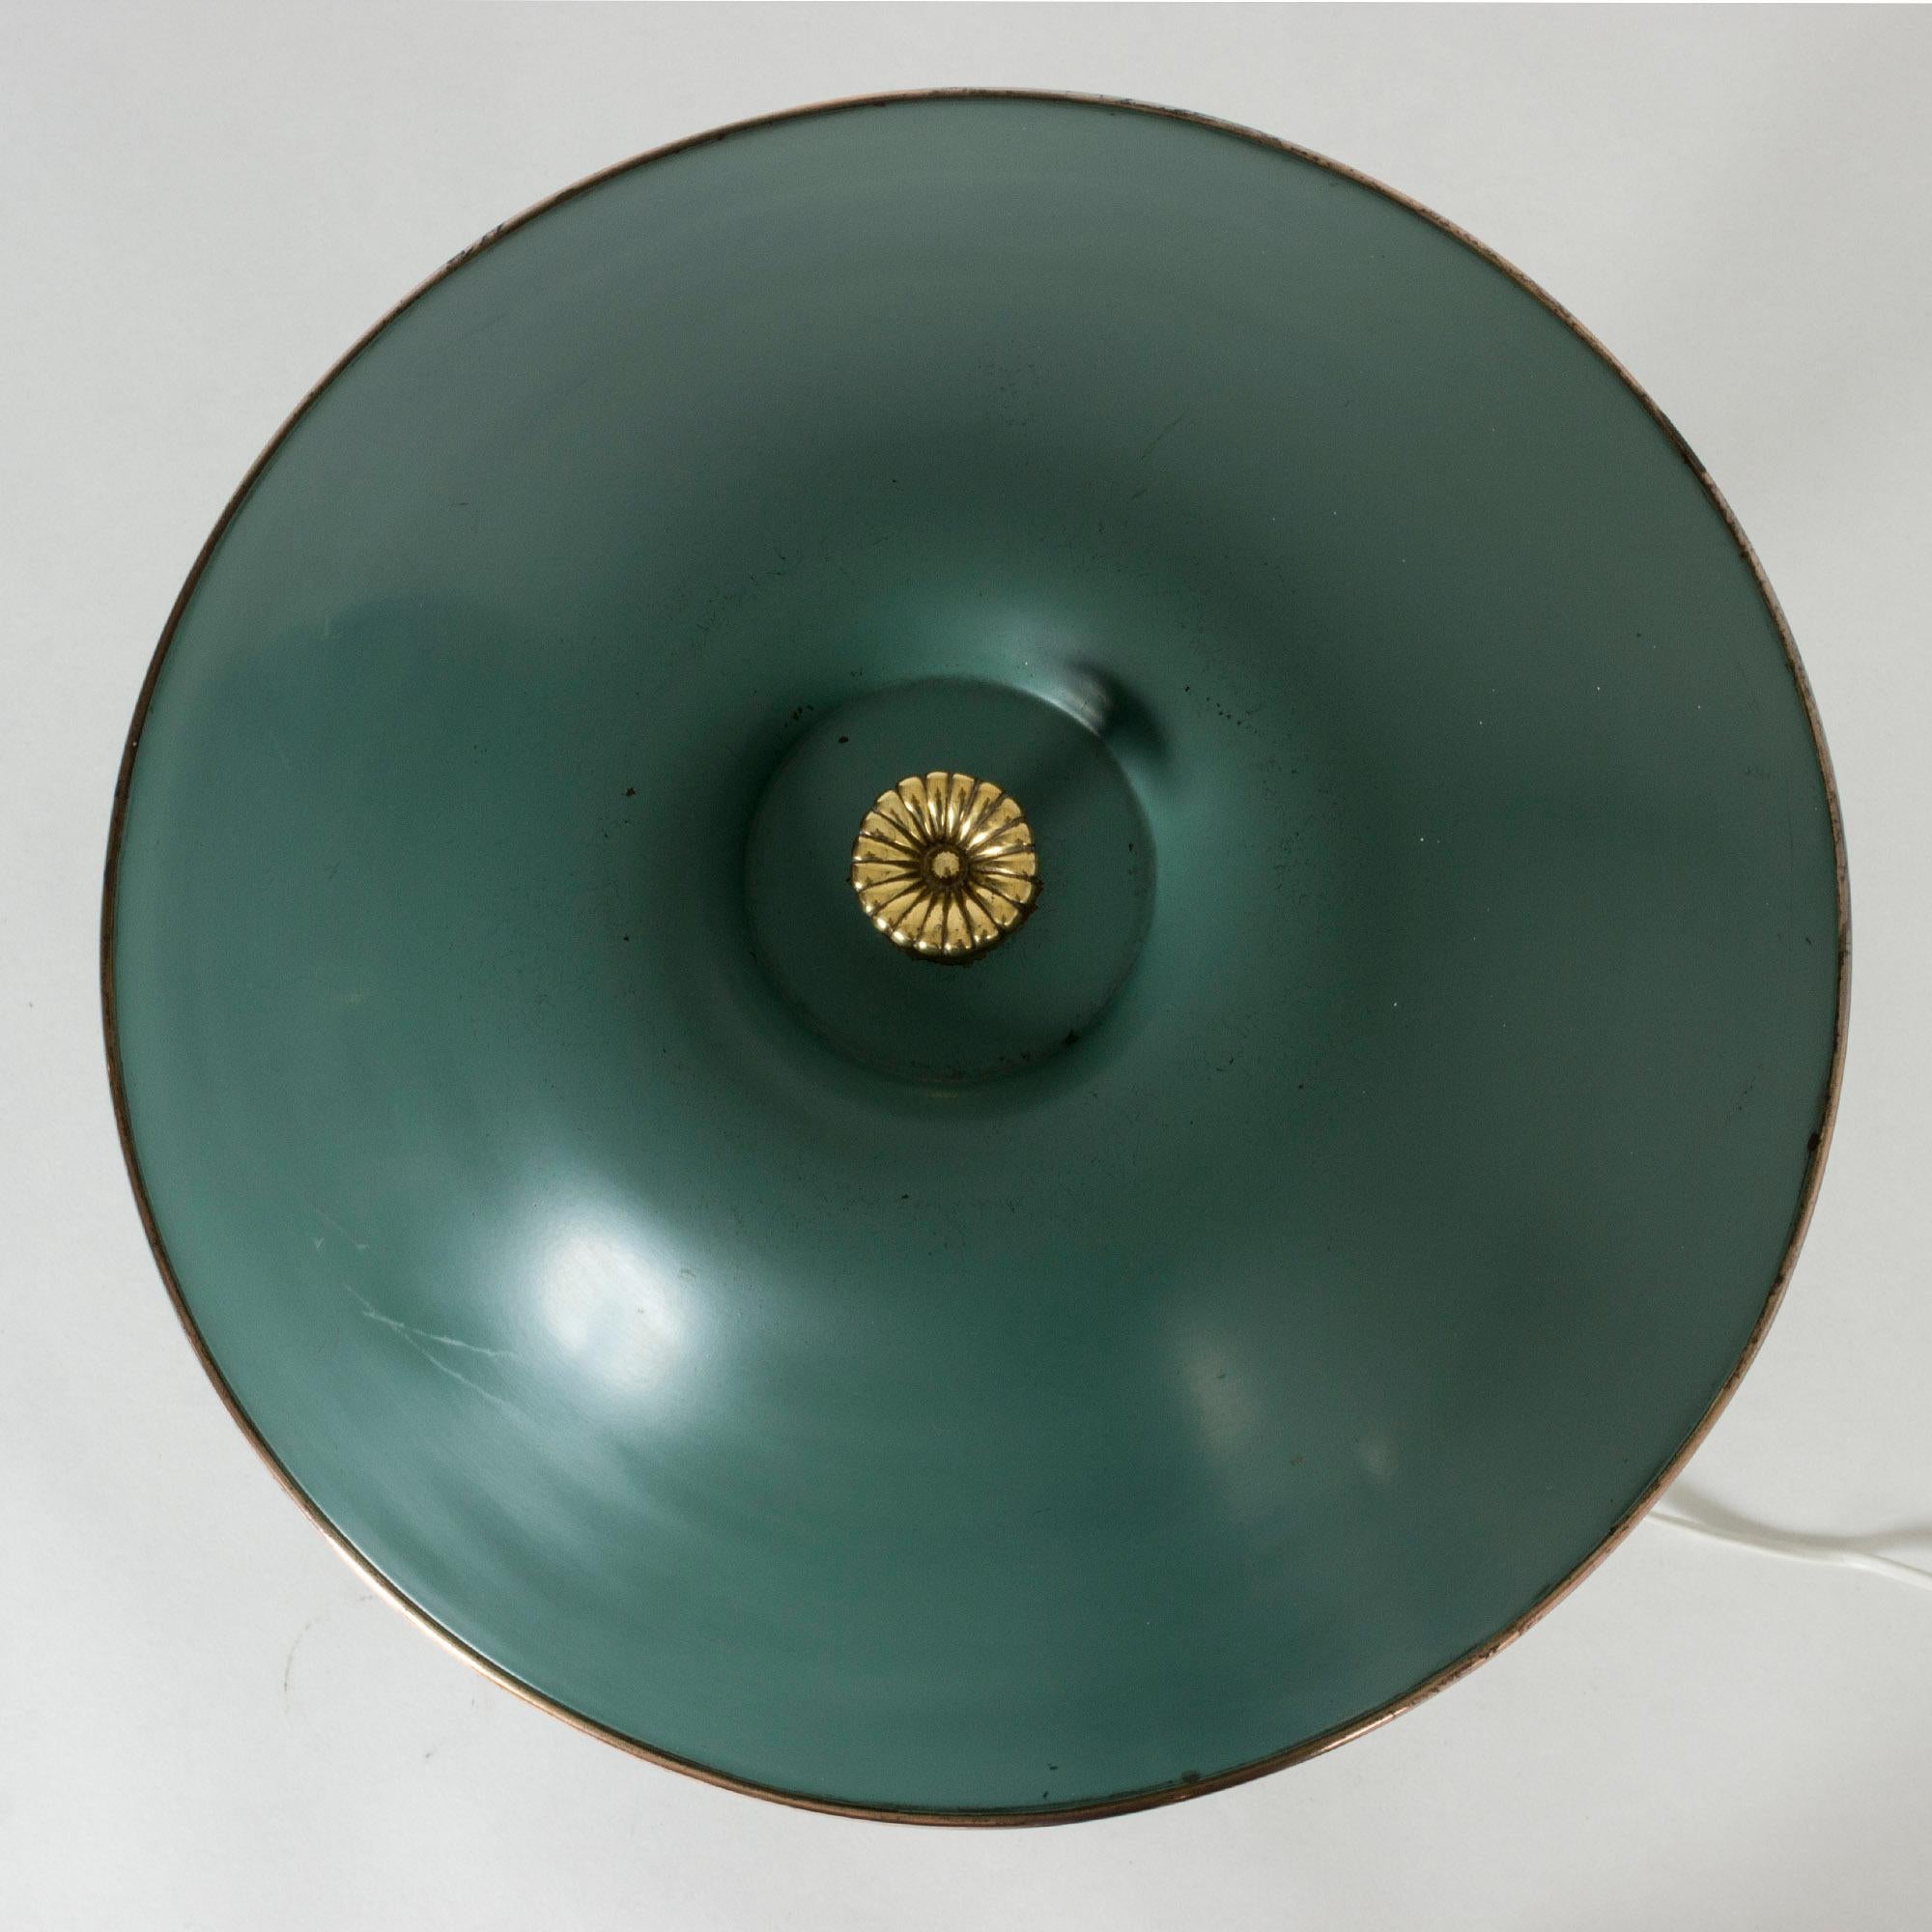 Nordiska Kompaniet Brass Table Lamp with Green Lacquered Shade 1